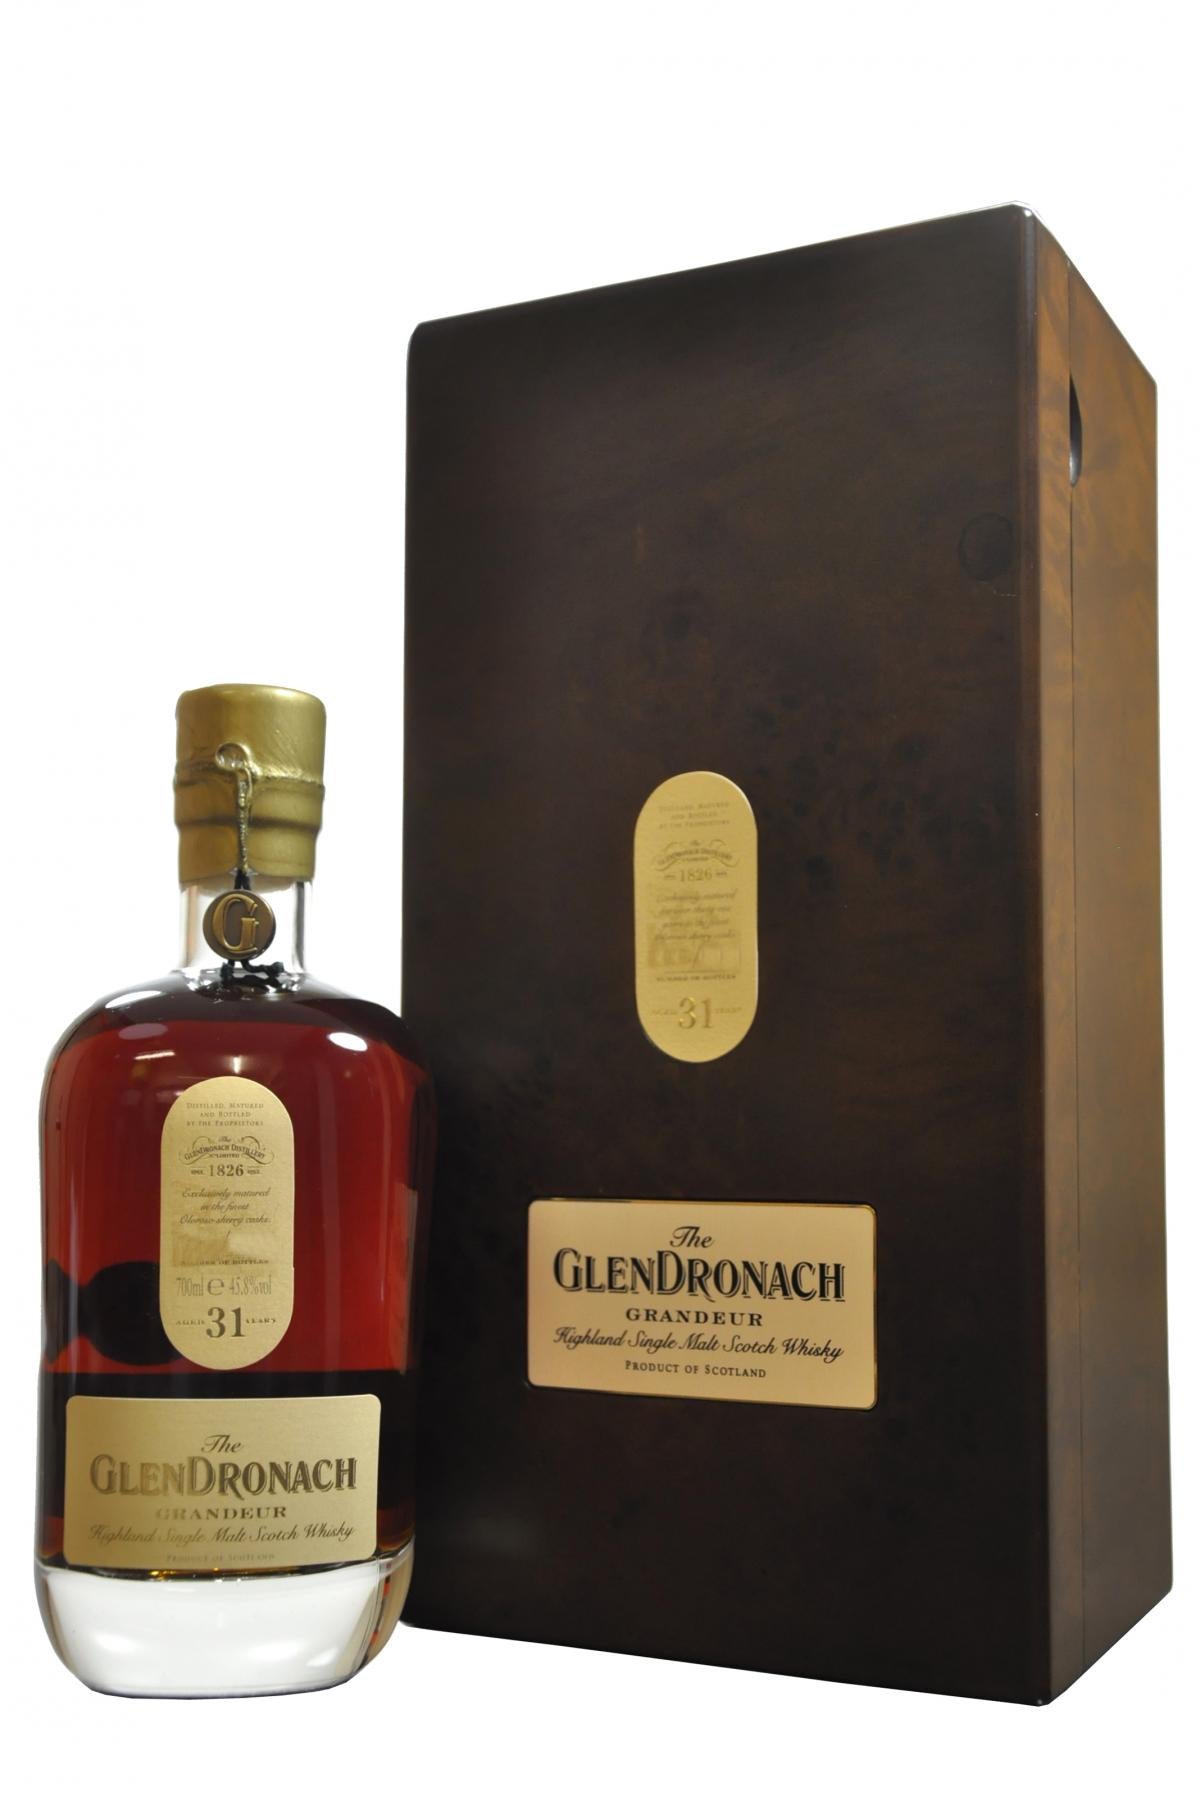 glendronach 31 year old, grandeur batch 003, speyside single malt scotch whisky